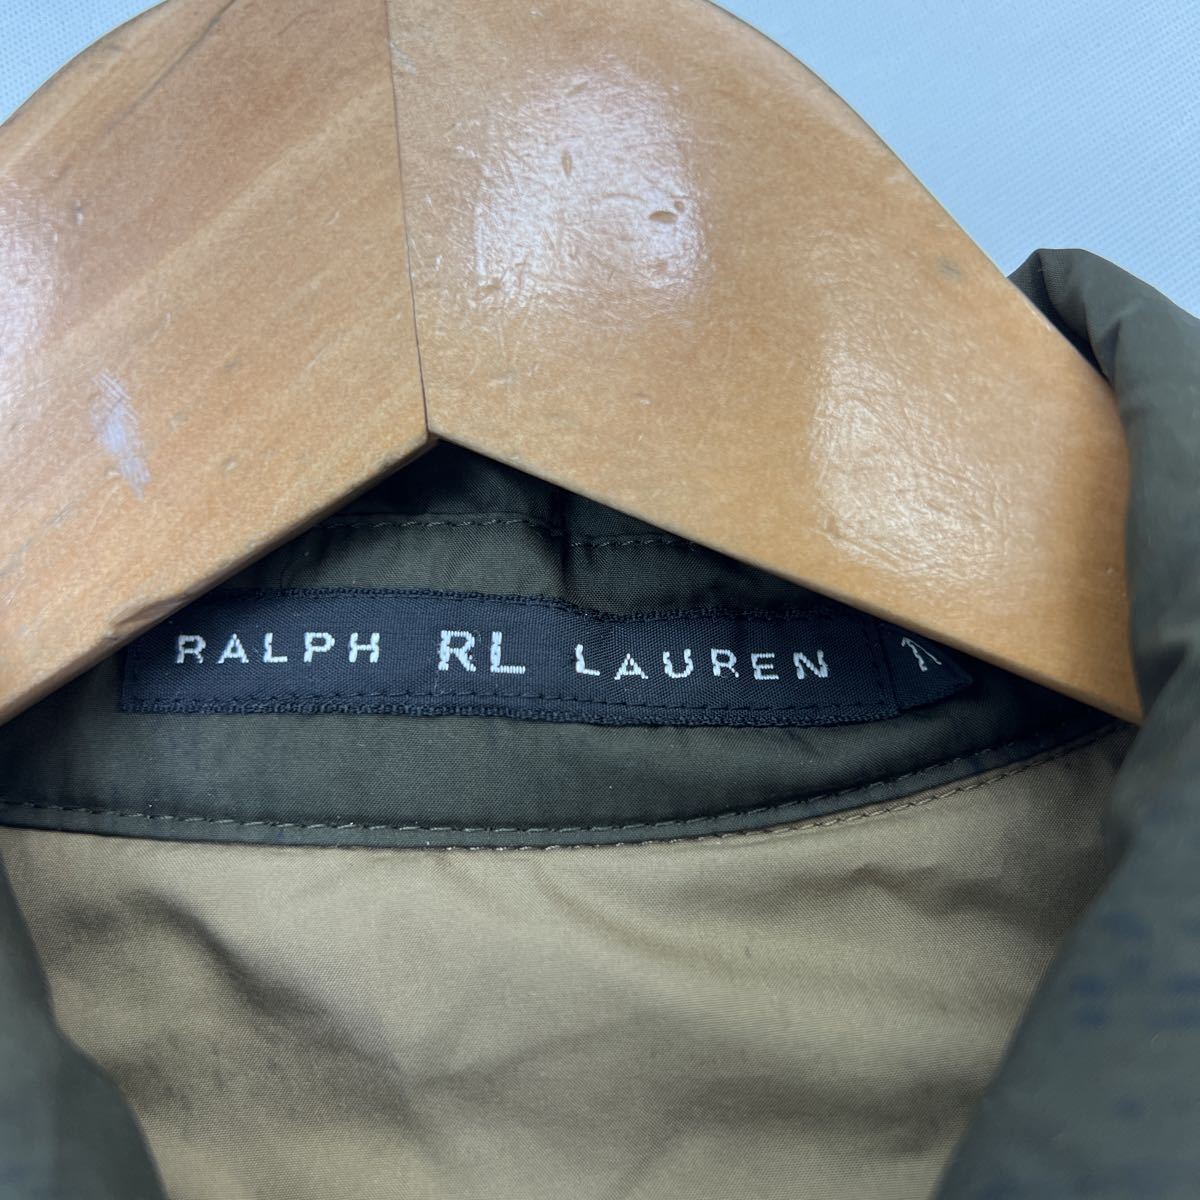  Ralph Lauren * RALPH LAUREN установленный атмосфера * милитари style жакет блузон оливковый хаки 11 взрослый casual б/у одежда MIX#C275